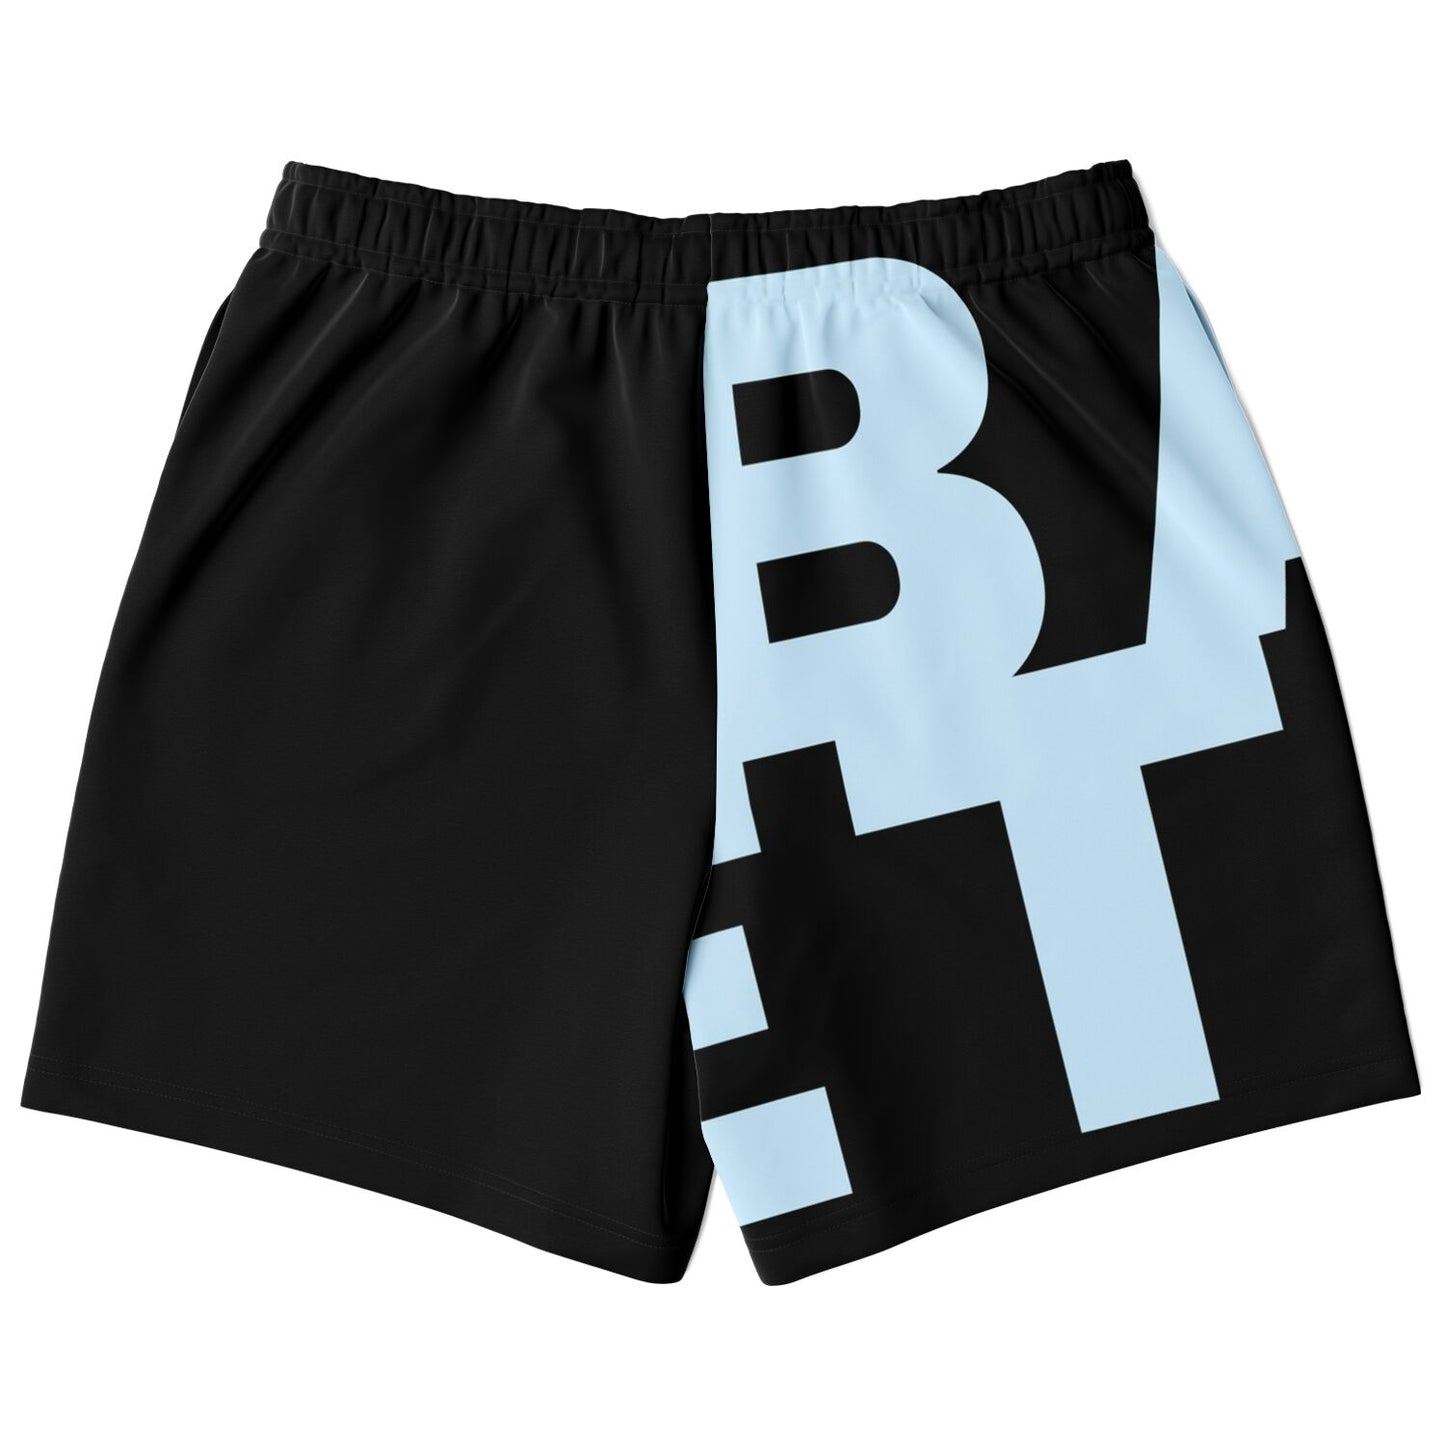 Duntalk "Beyond" Basketball Mid-length Shorts  - Black